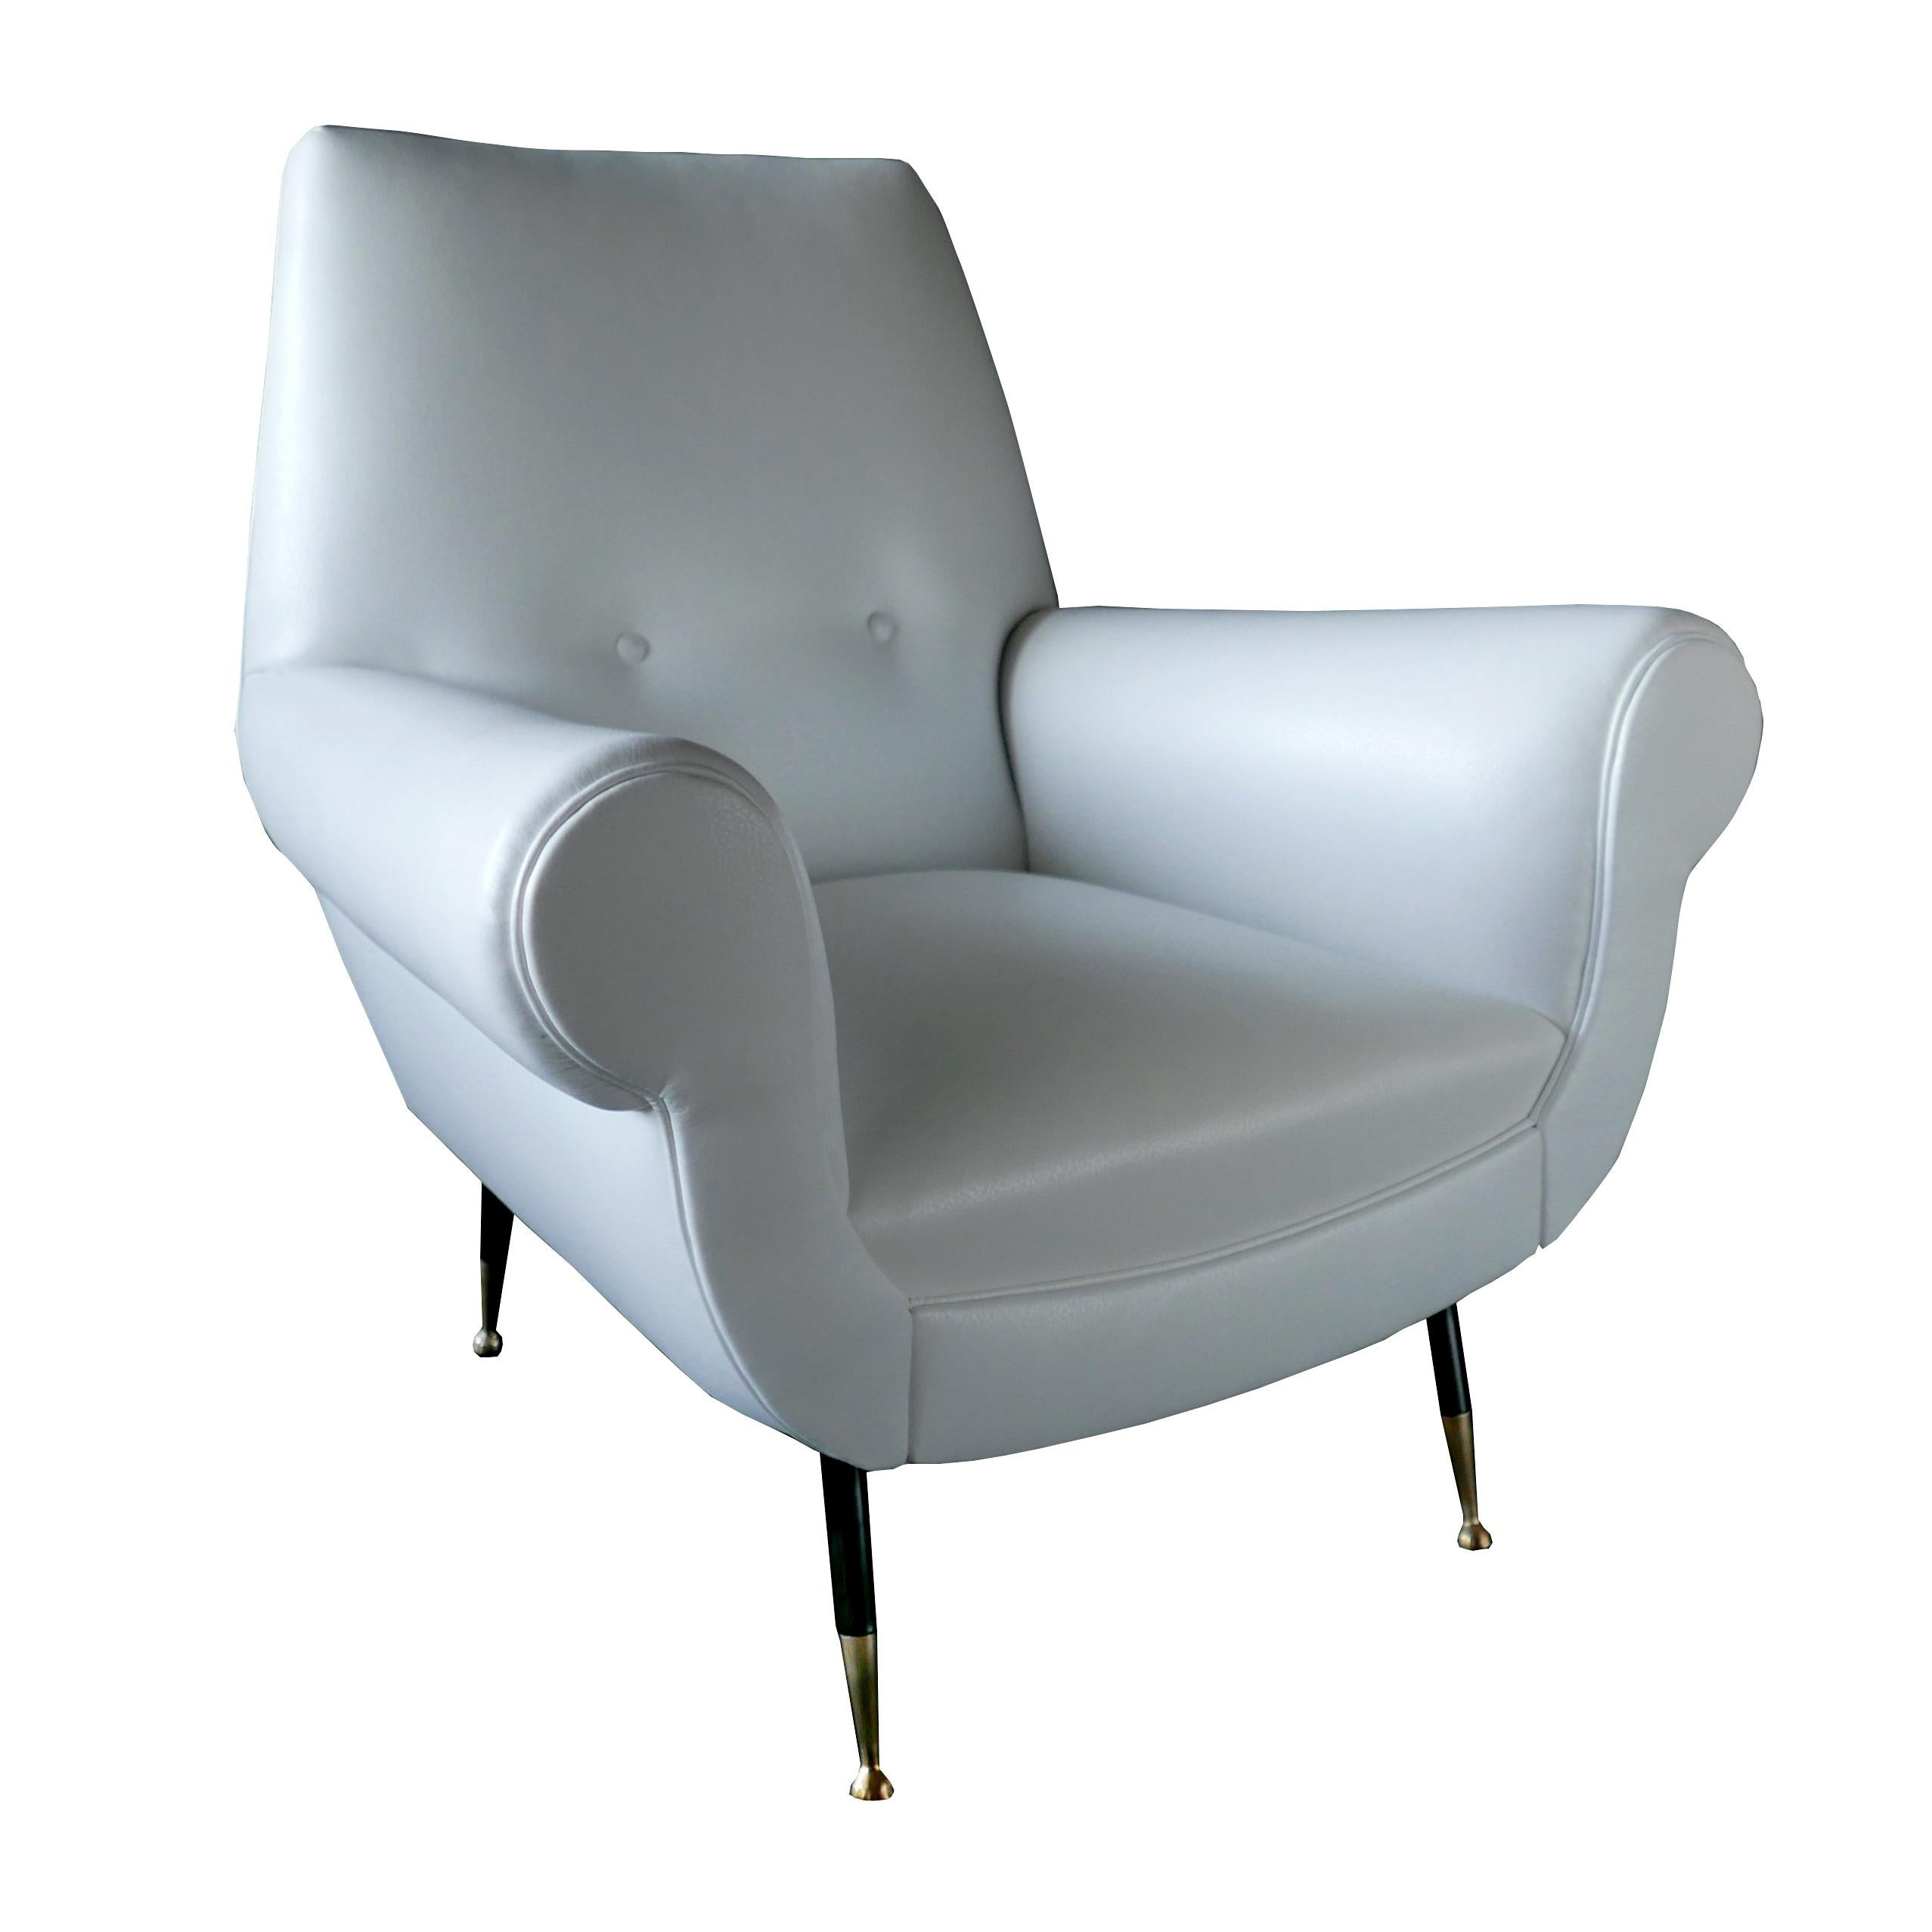 Pair of Italian Modern Leather and Brass Lounge Chairs, Gigi Radice for Minotti 2